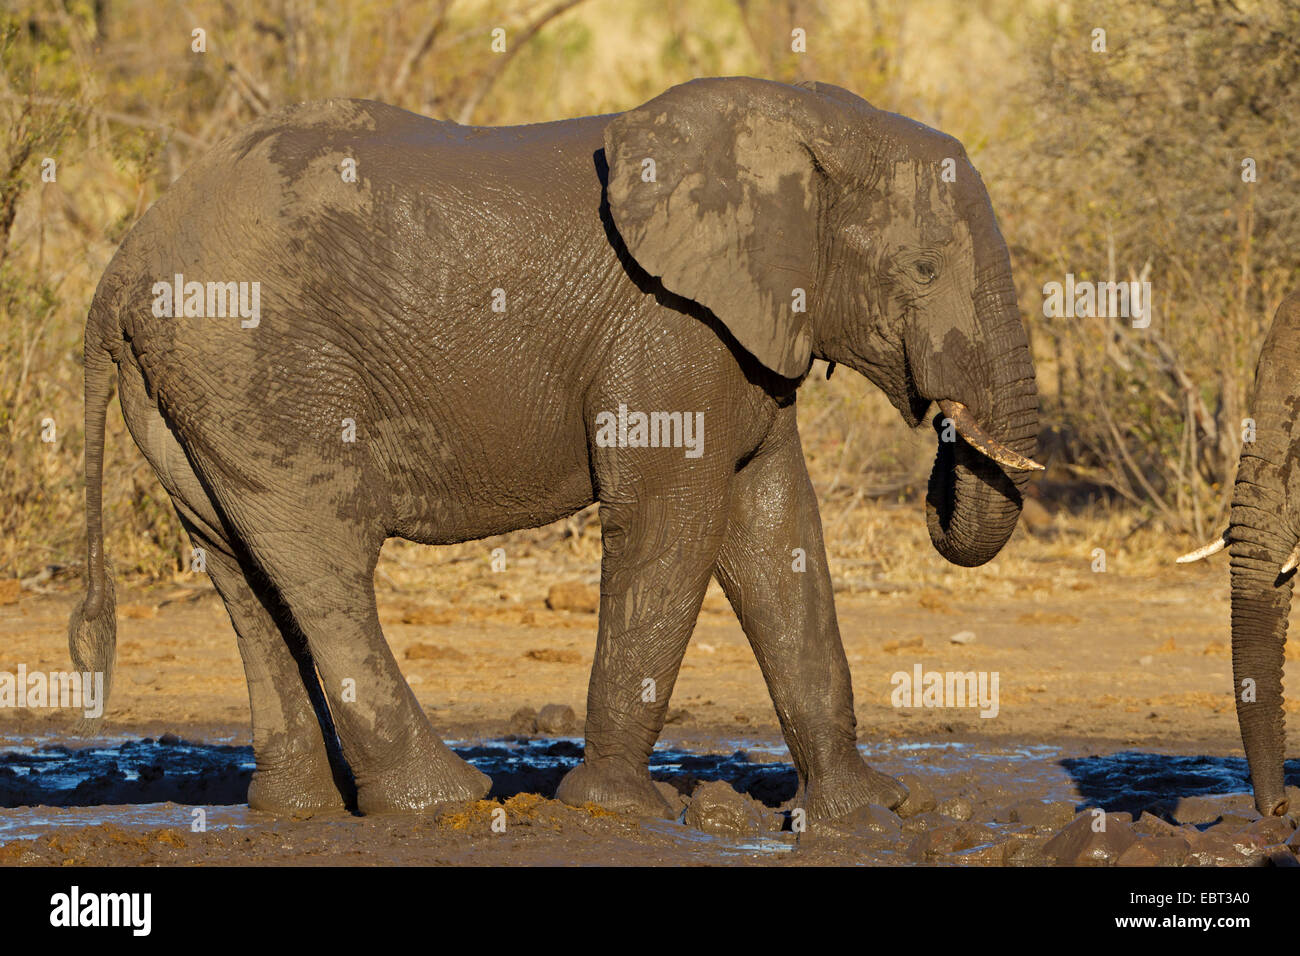 African elephant (Loxodonta africana), juvenile elephant after mud bath, South Africa, Krueger National Park Stock Photo